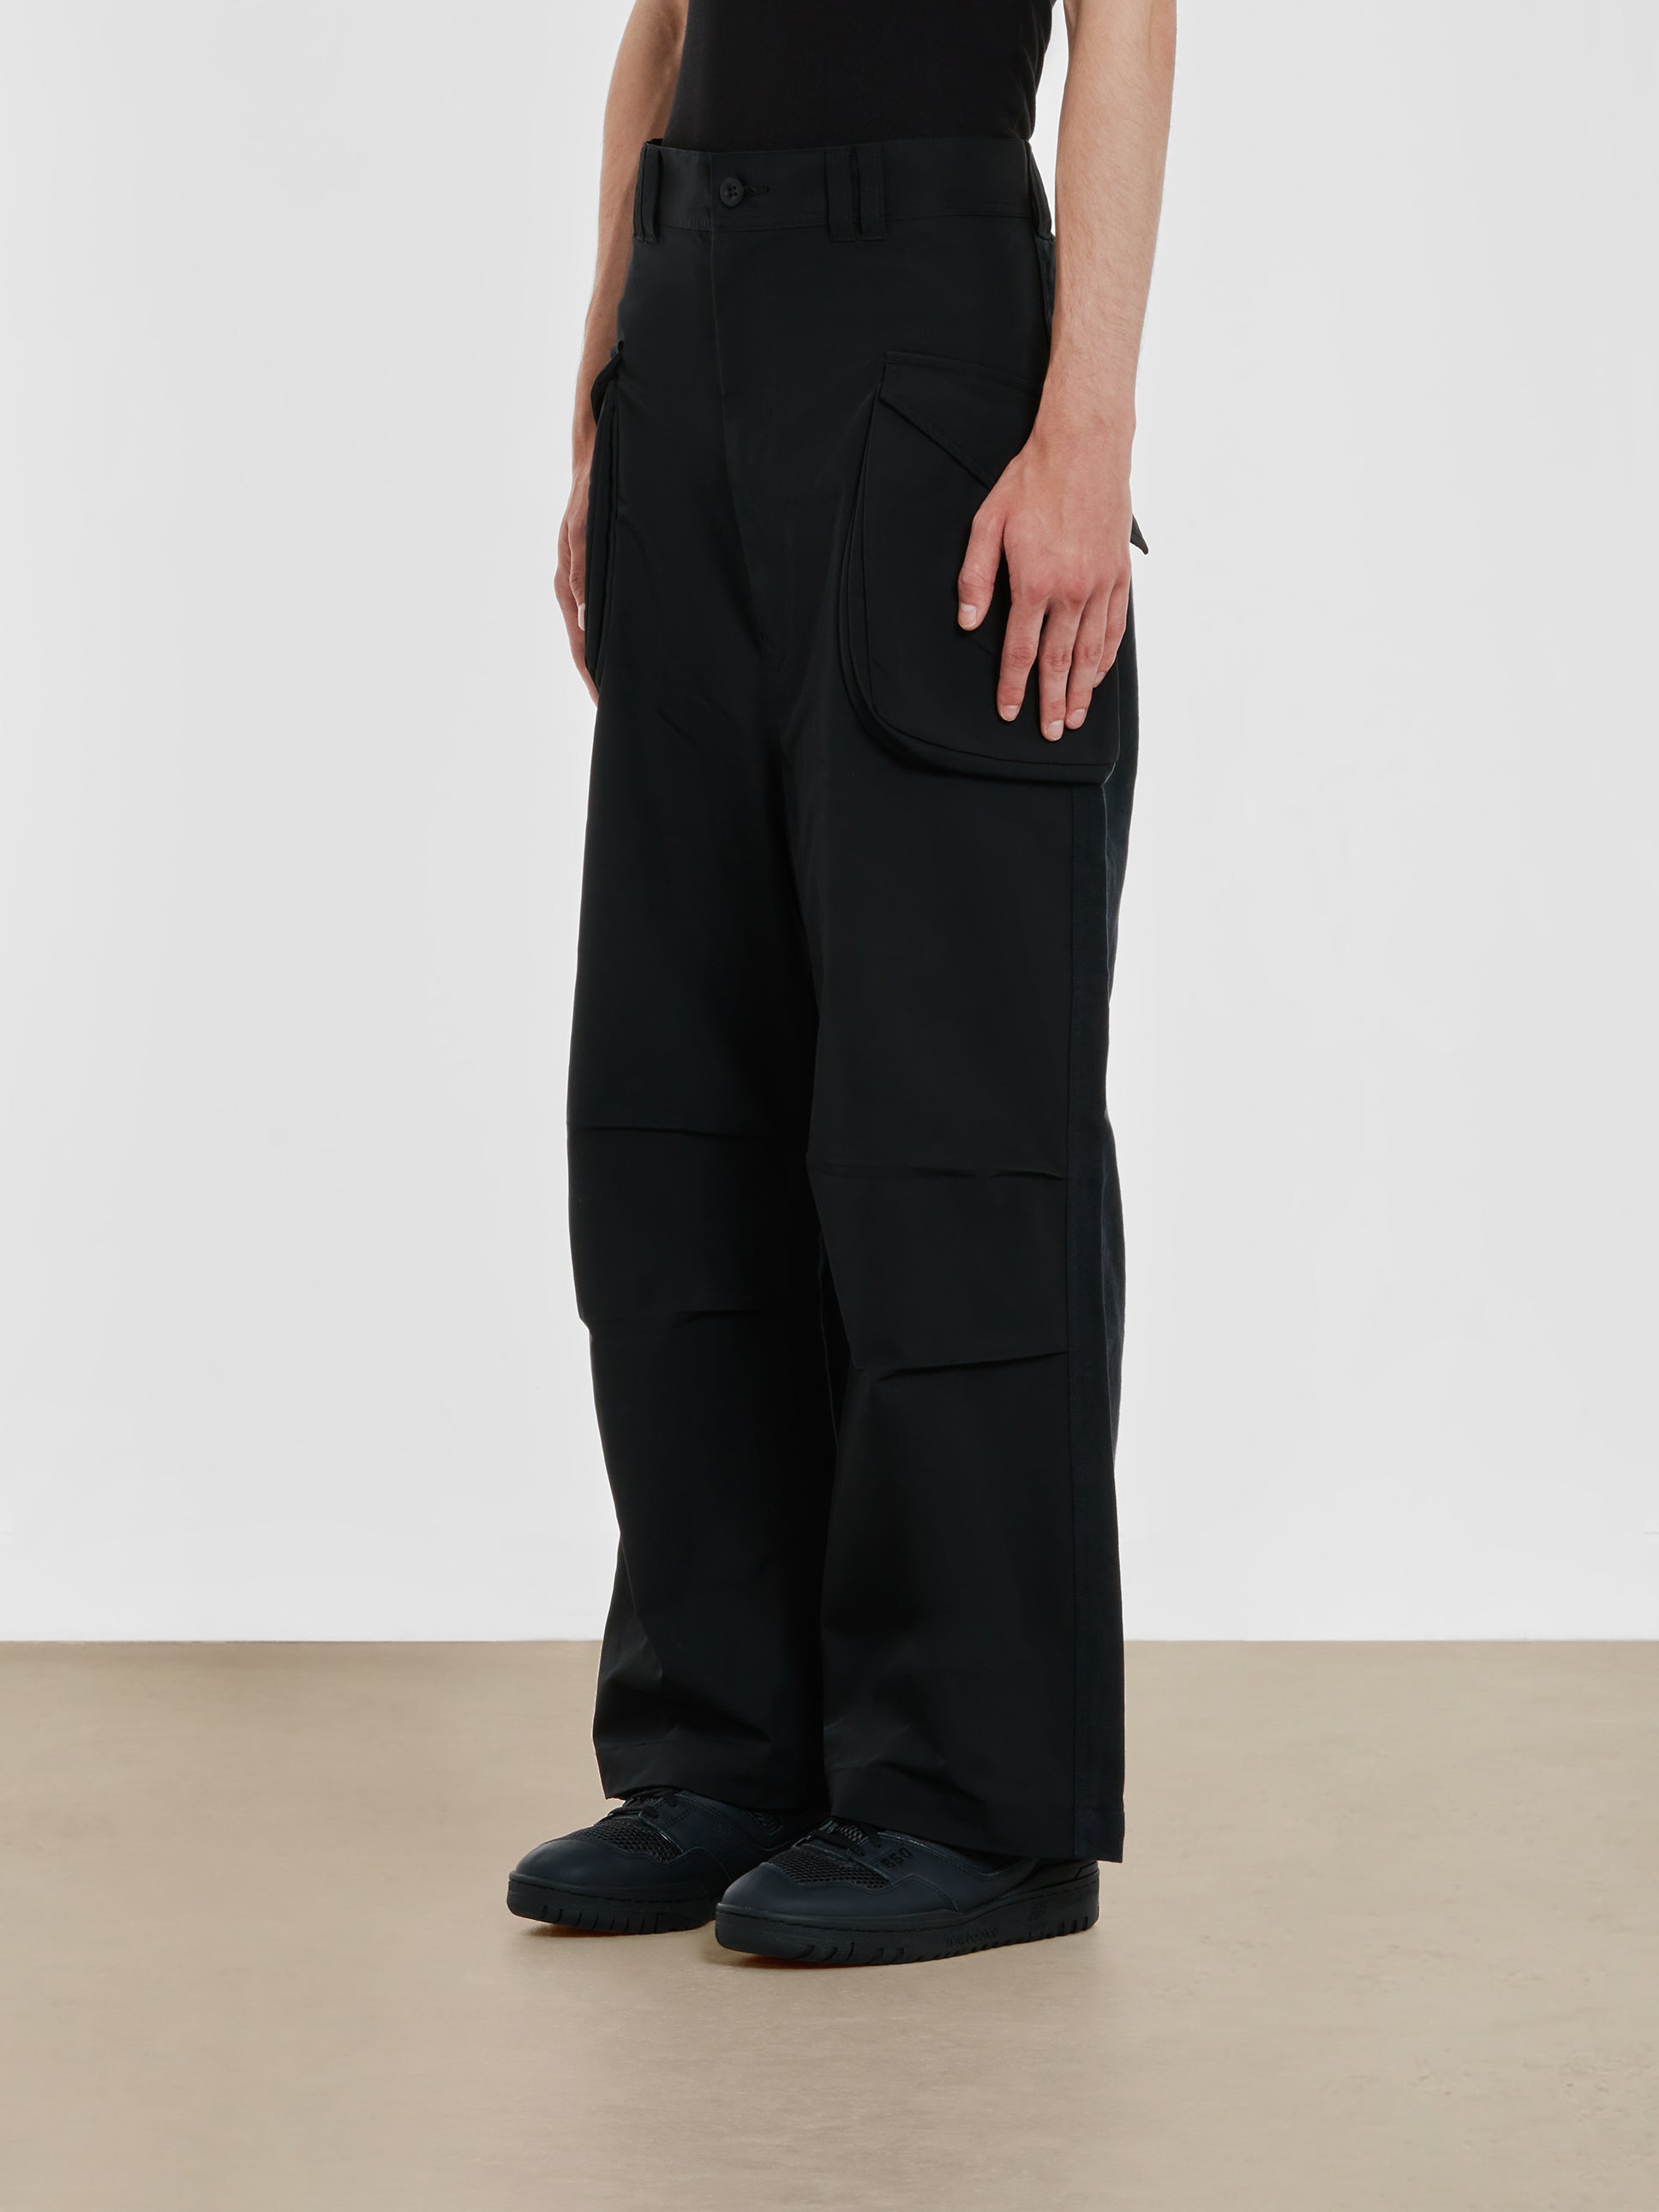 Junya Watanabe MAN - Men’s Polyester Cotton Pants - (Black) view 2